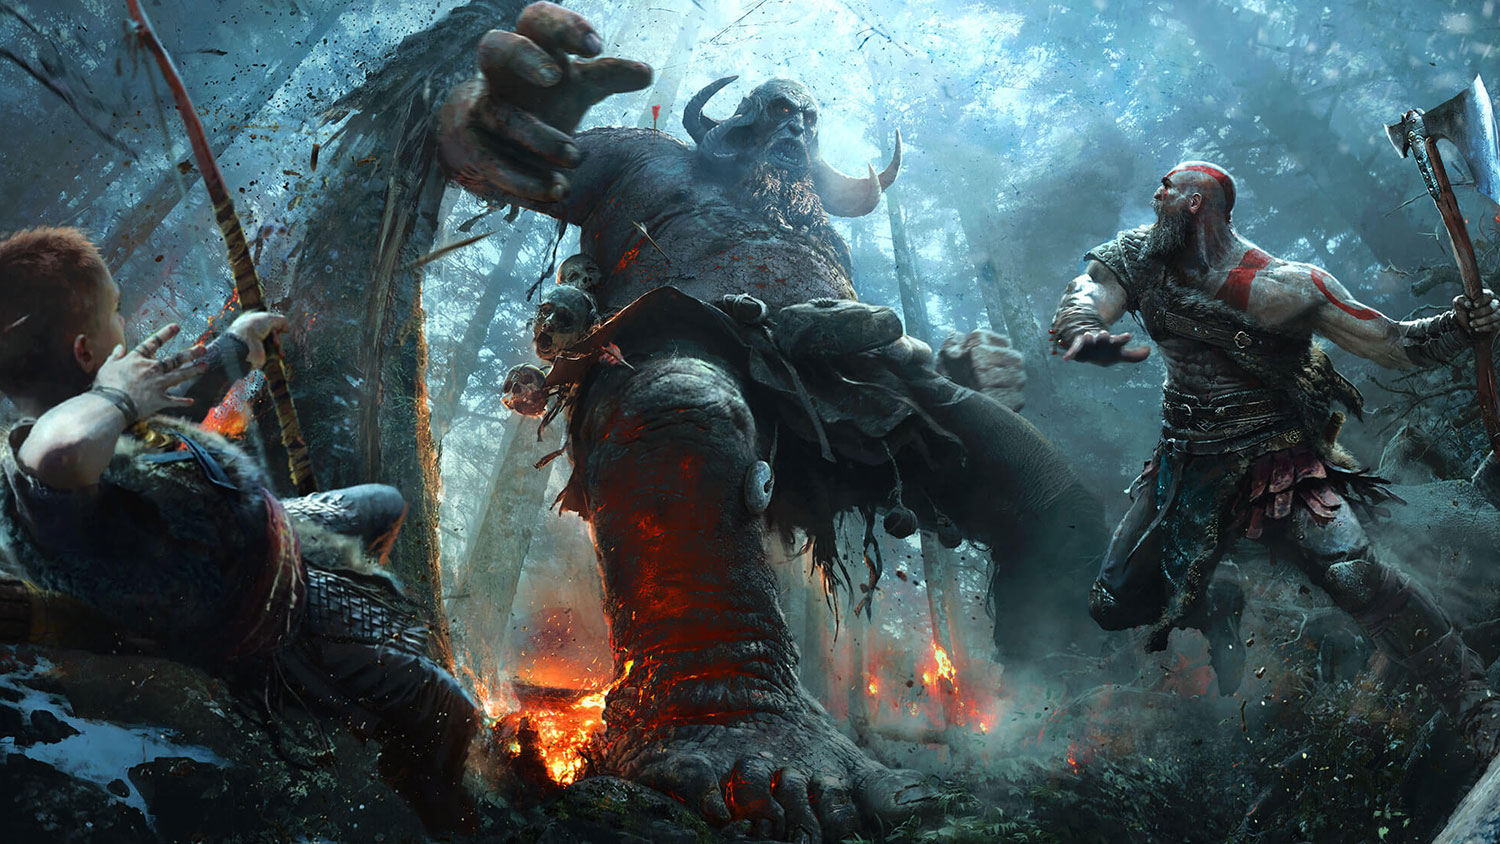 Sony's God of War Ragnarok Game Gets Positive Reviews - Bloomberg